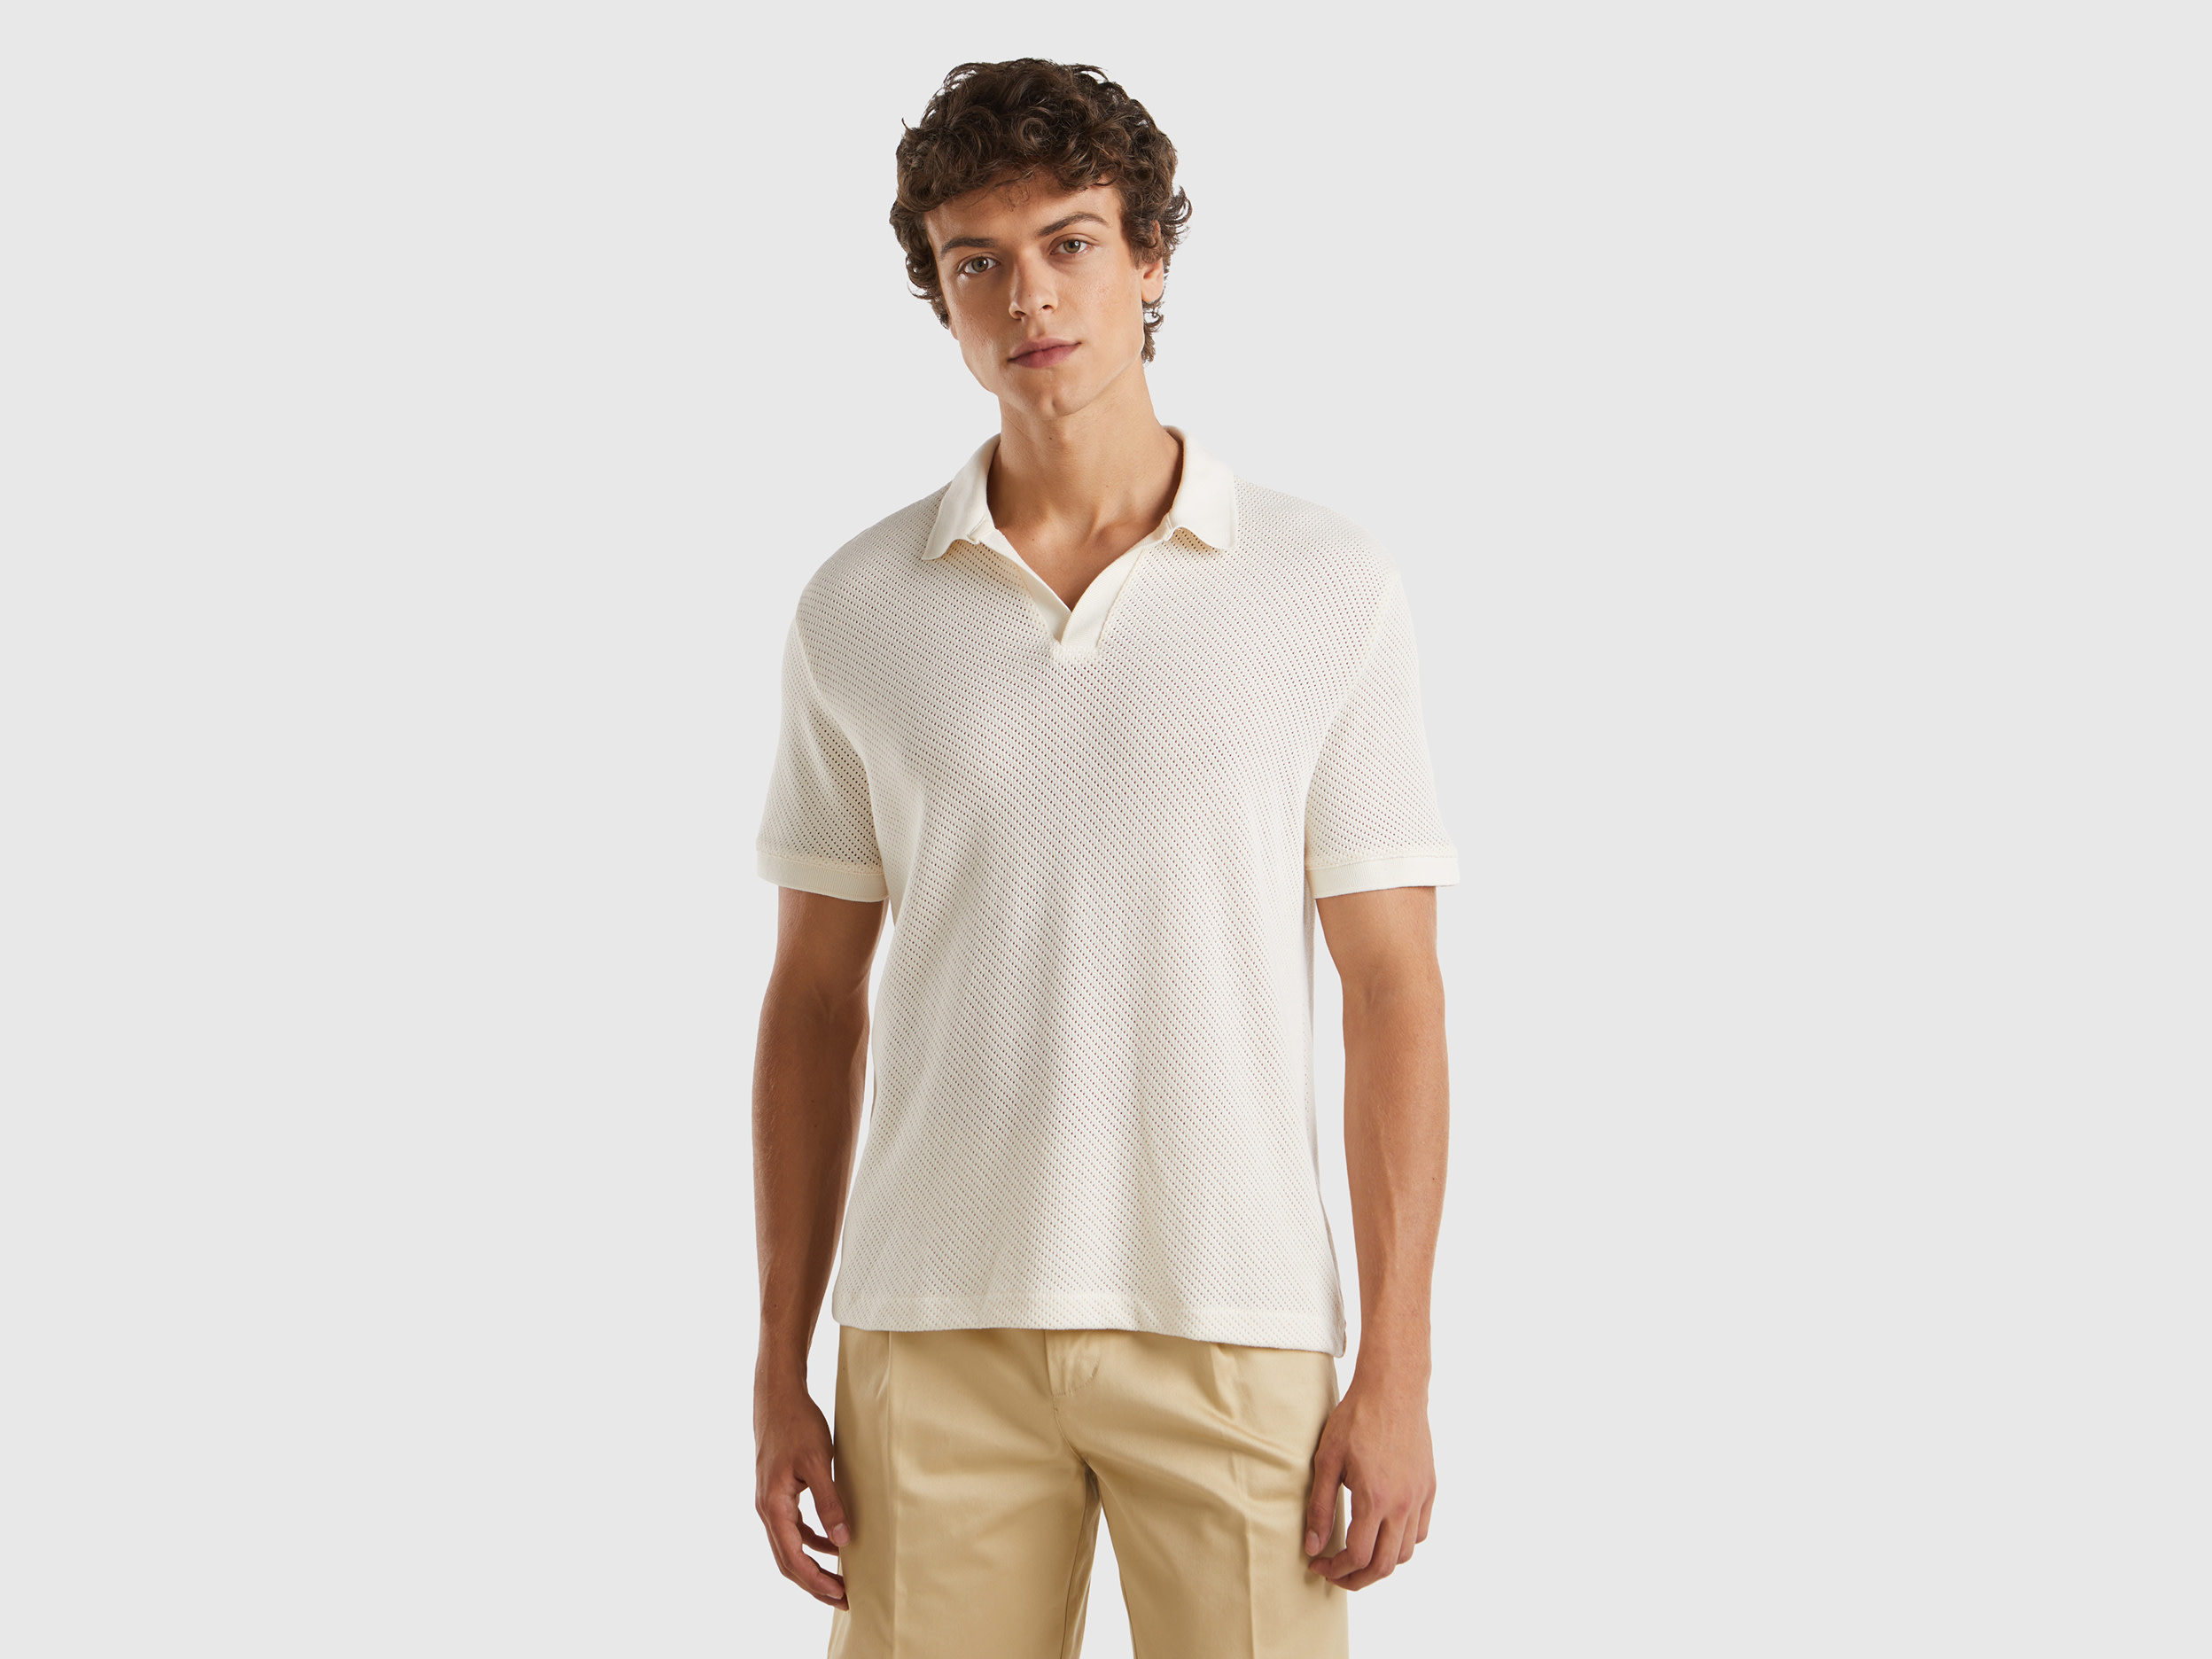 Image of Benetton, Perforated Cotton Polo Shirt, size S, Creamy White, Men